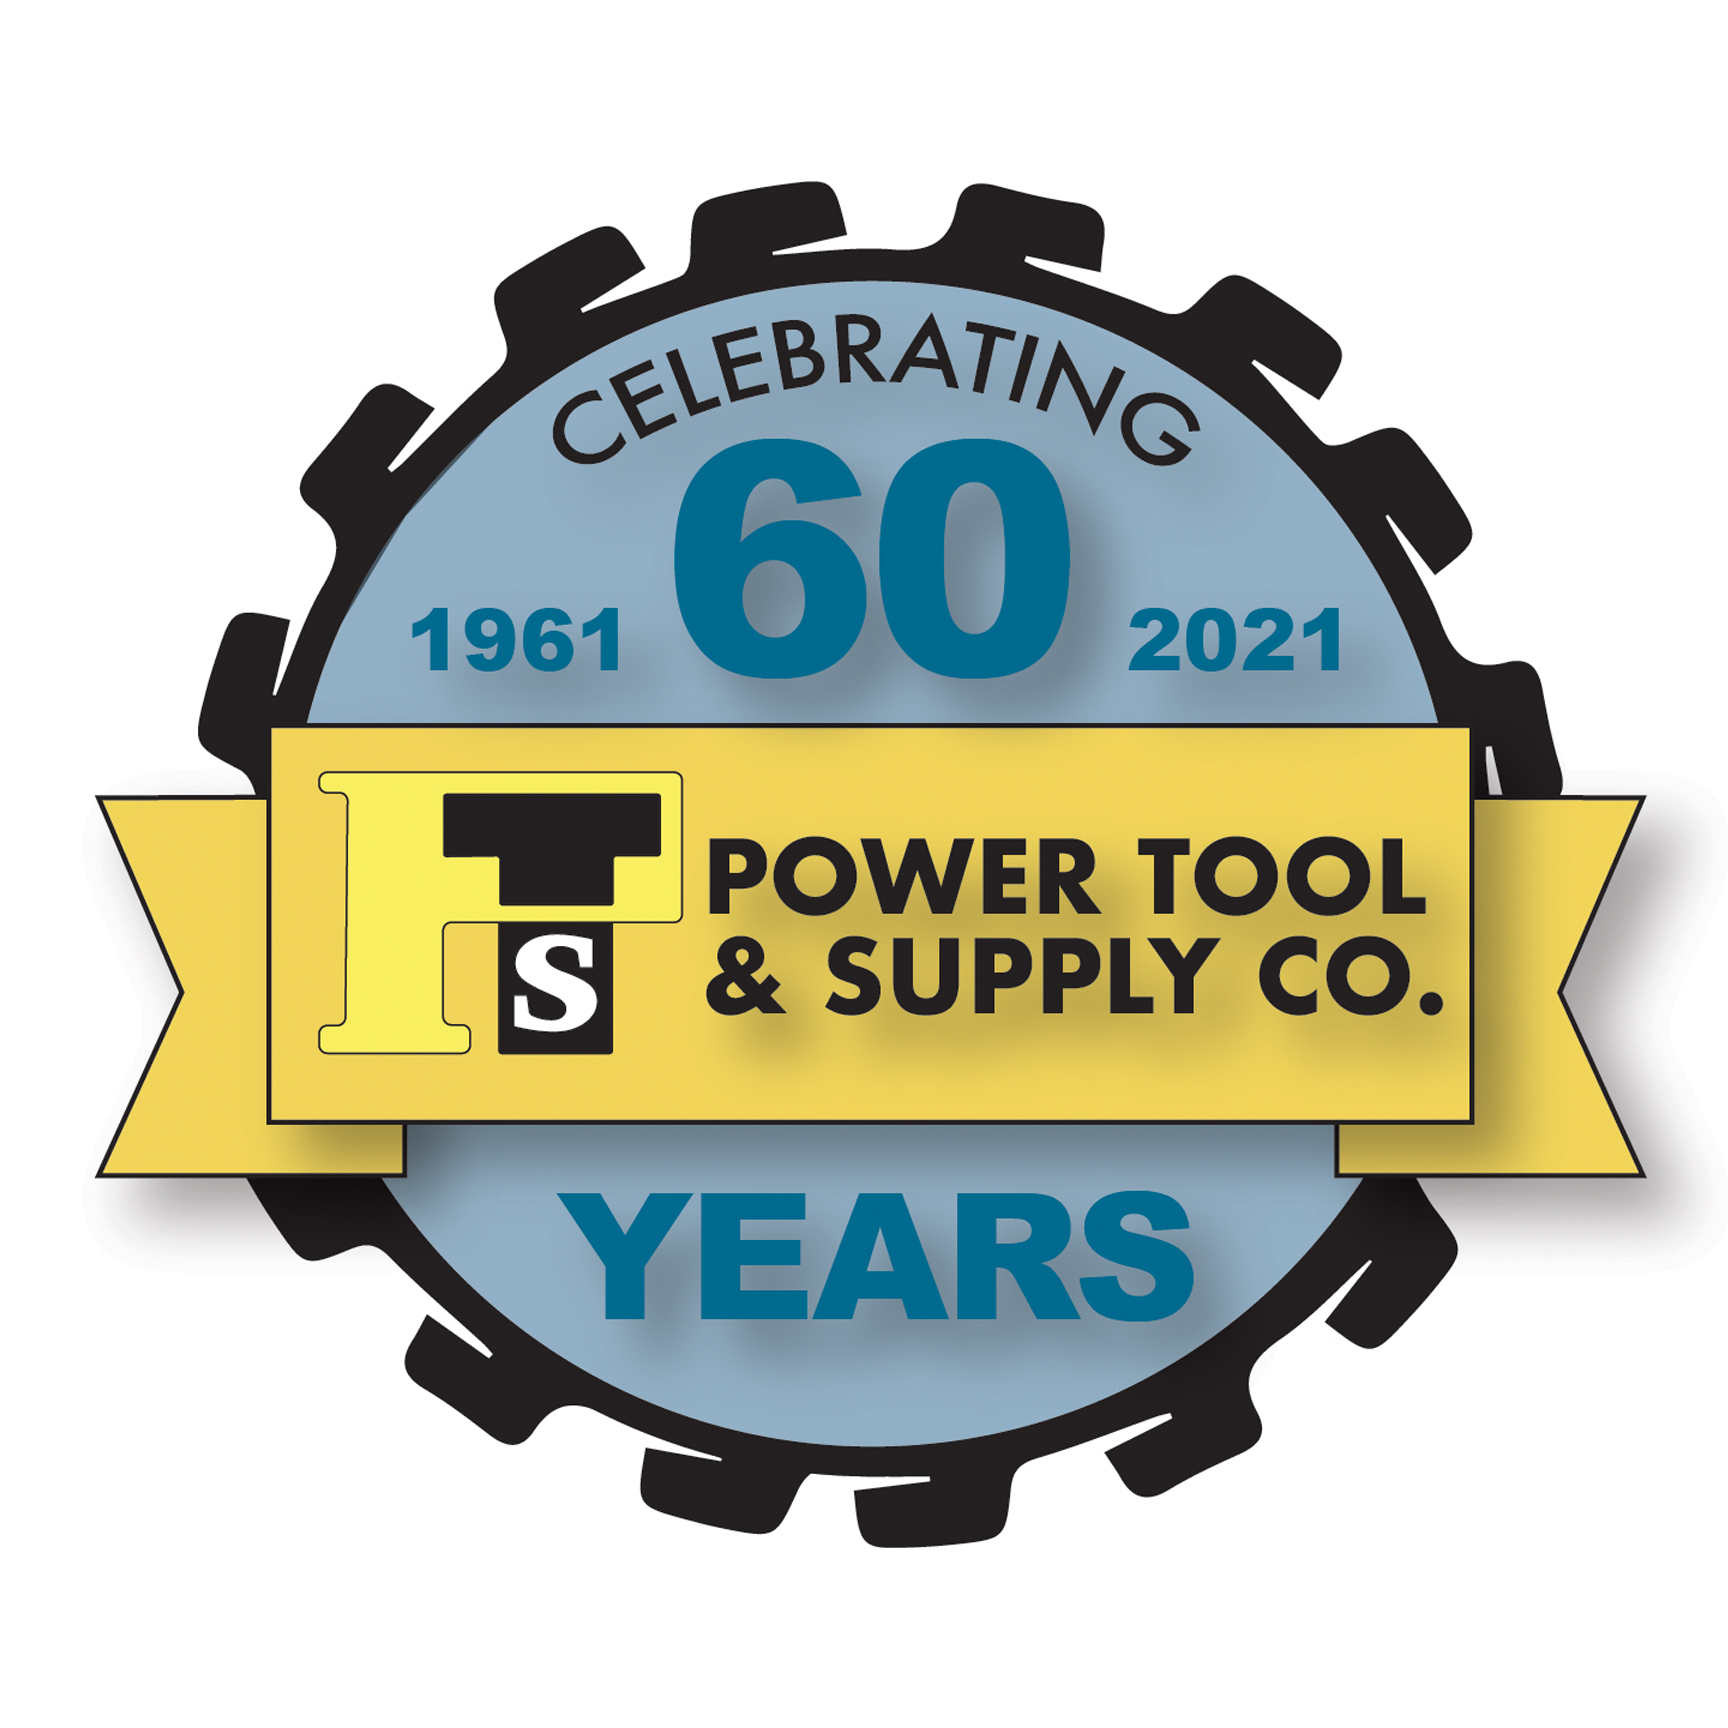 Power Tool & Supply Co. logo